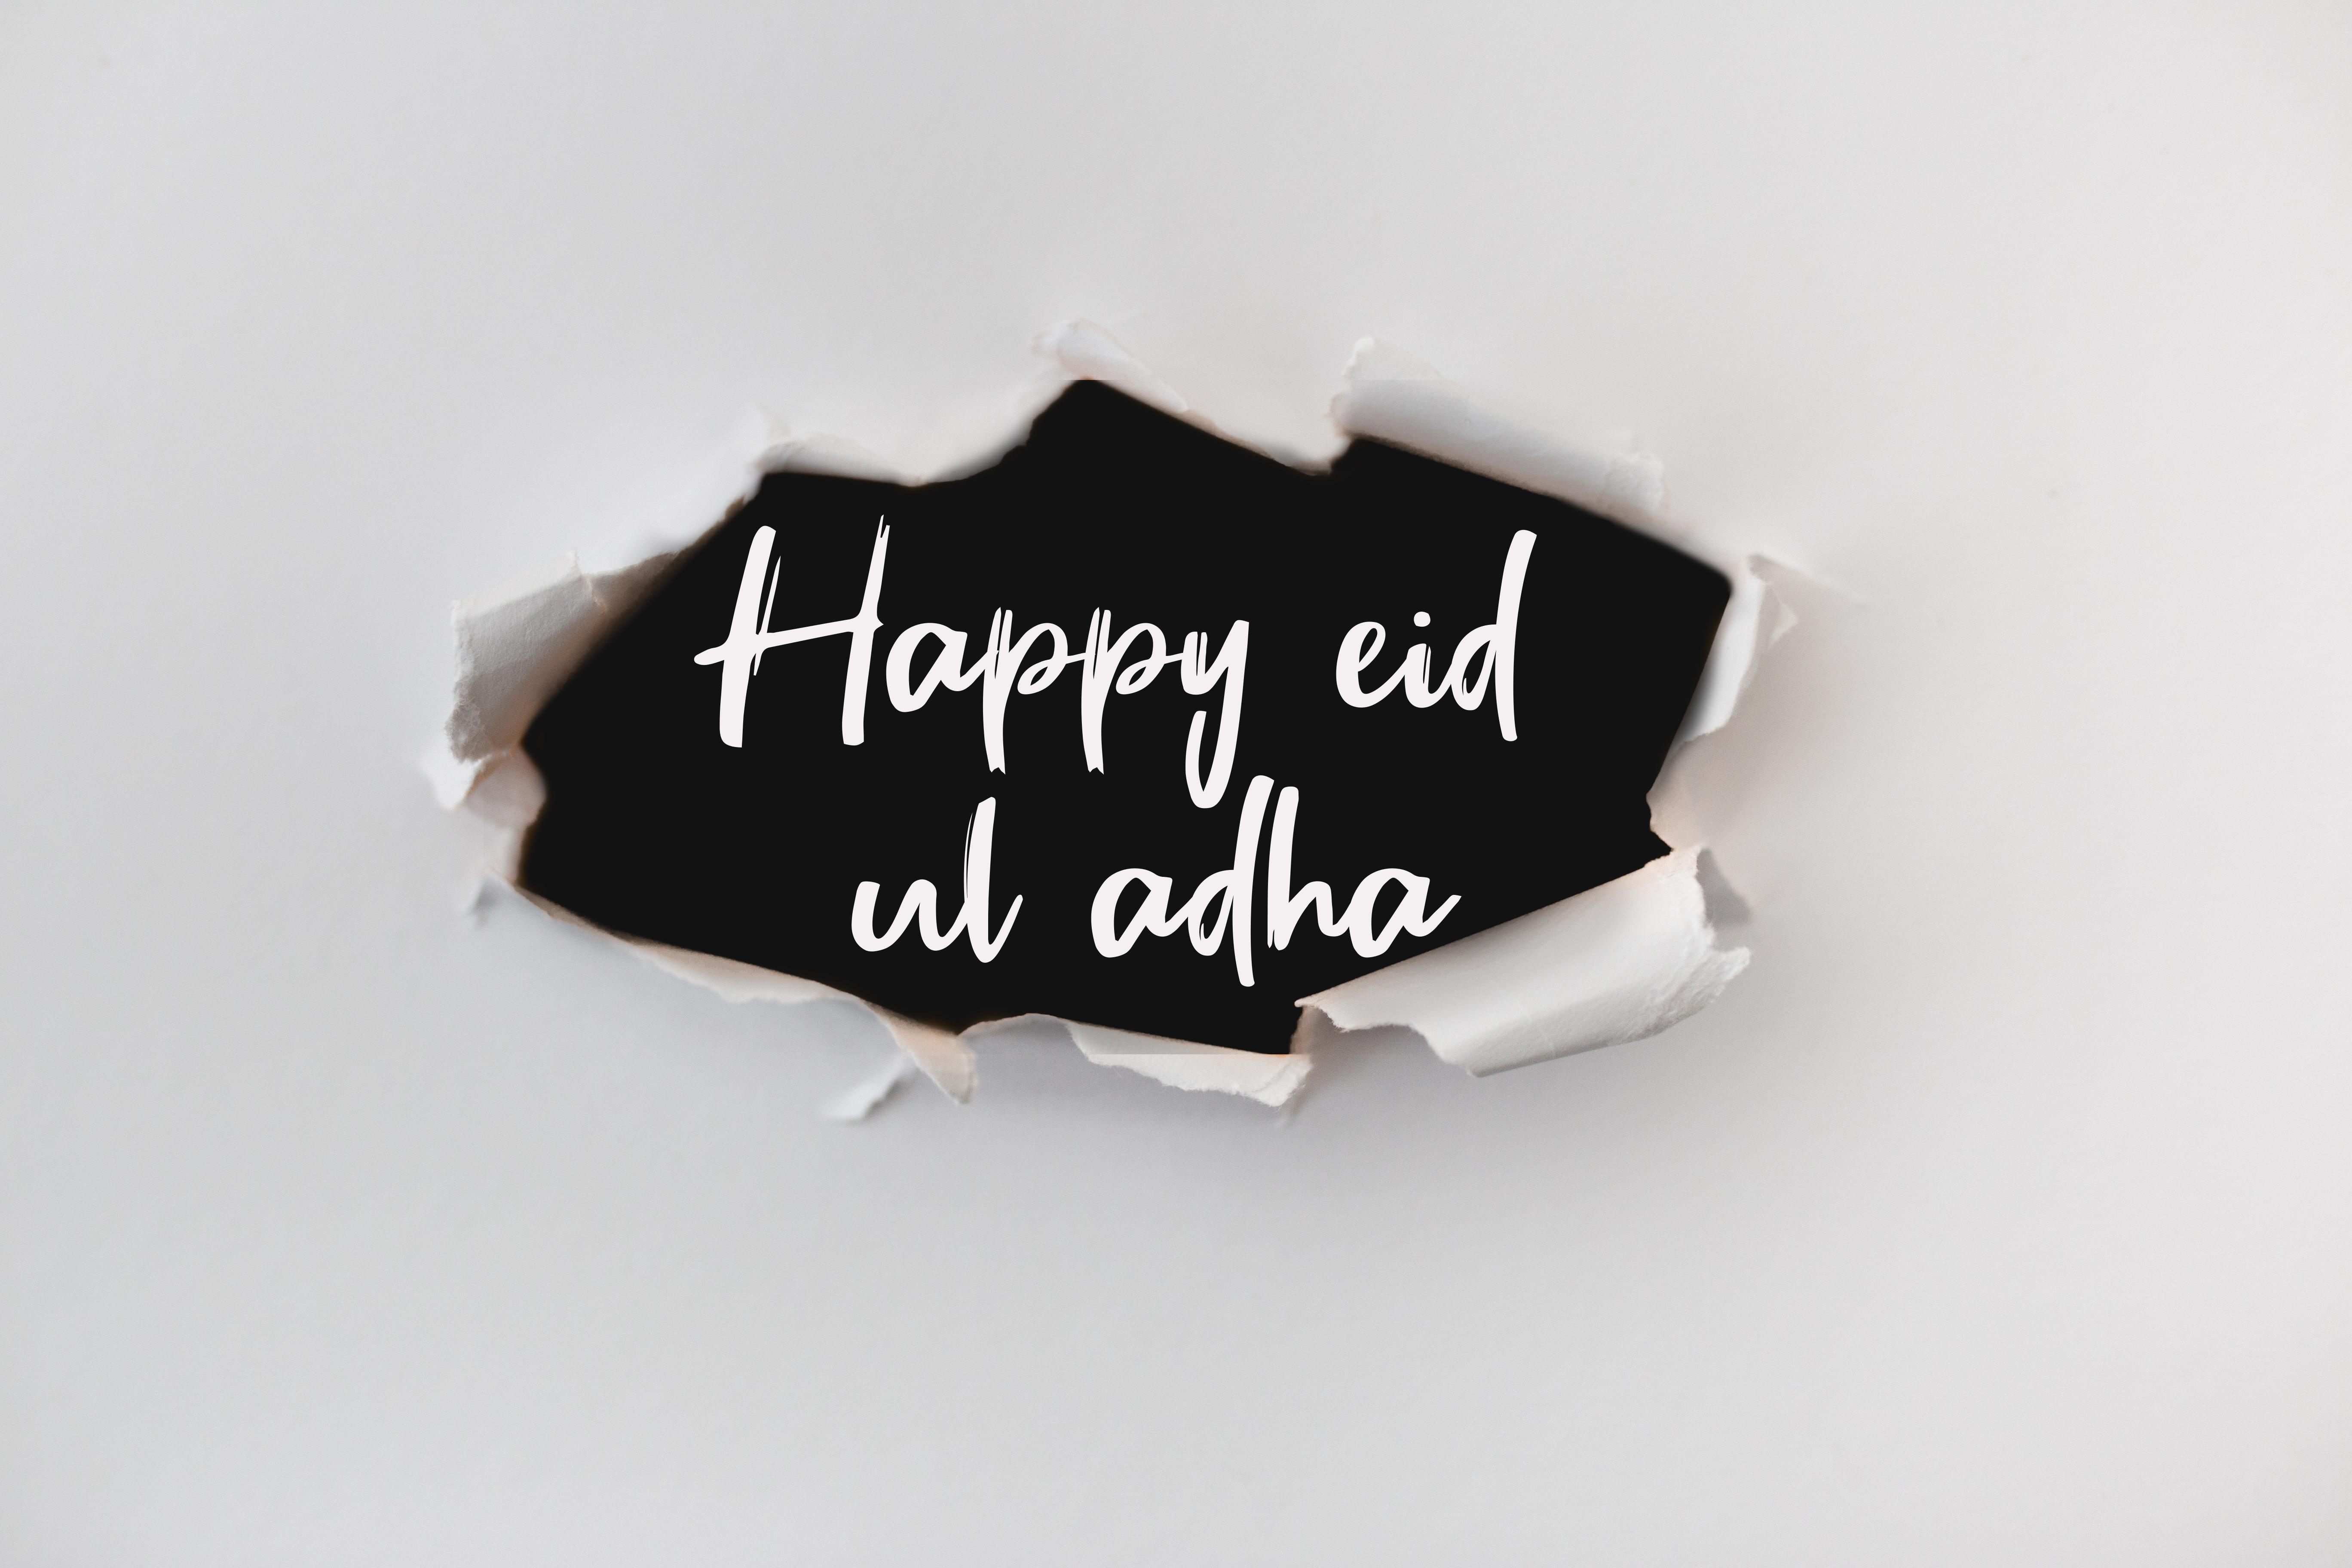 How Muslims Celebrate Eid ul-Adha